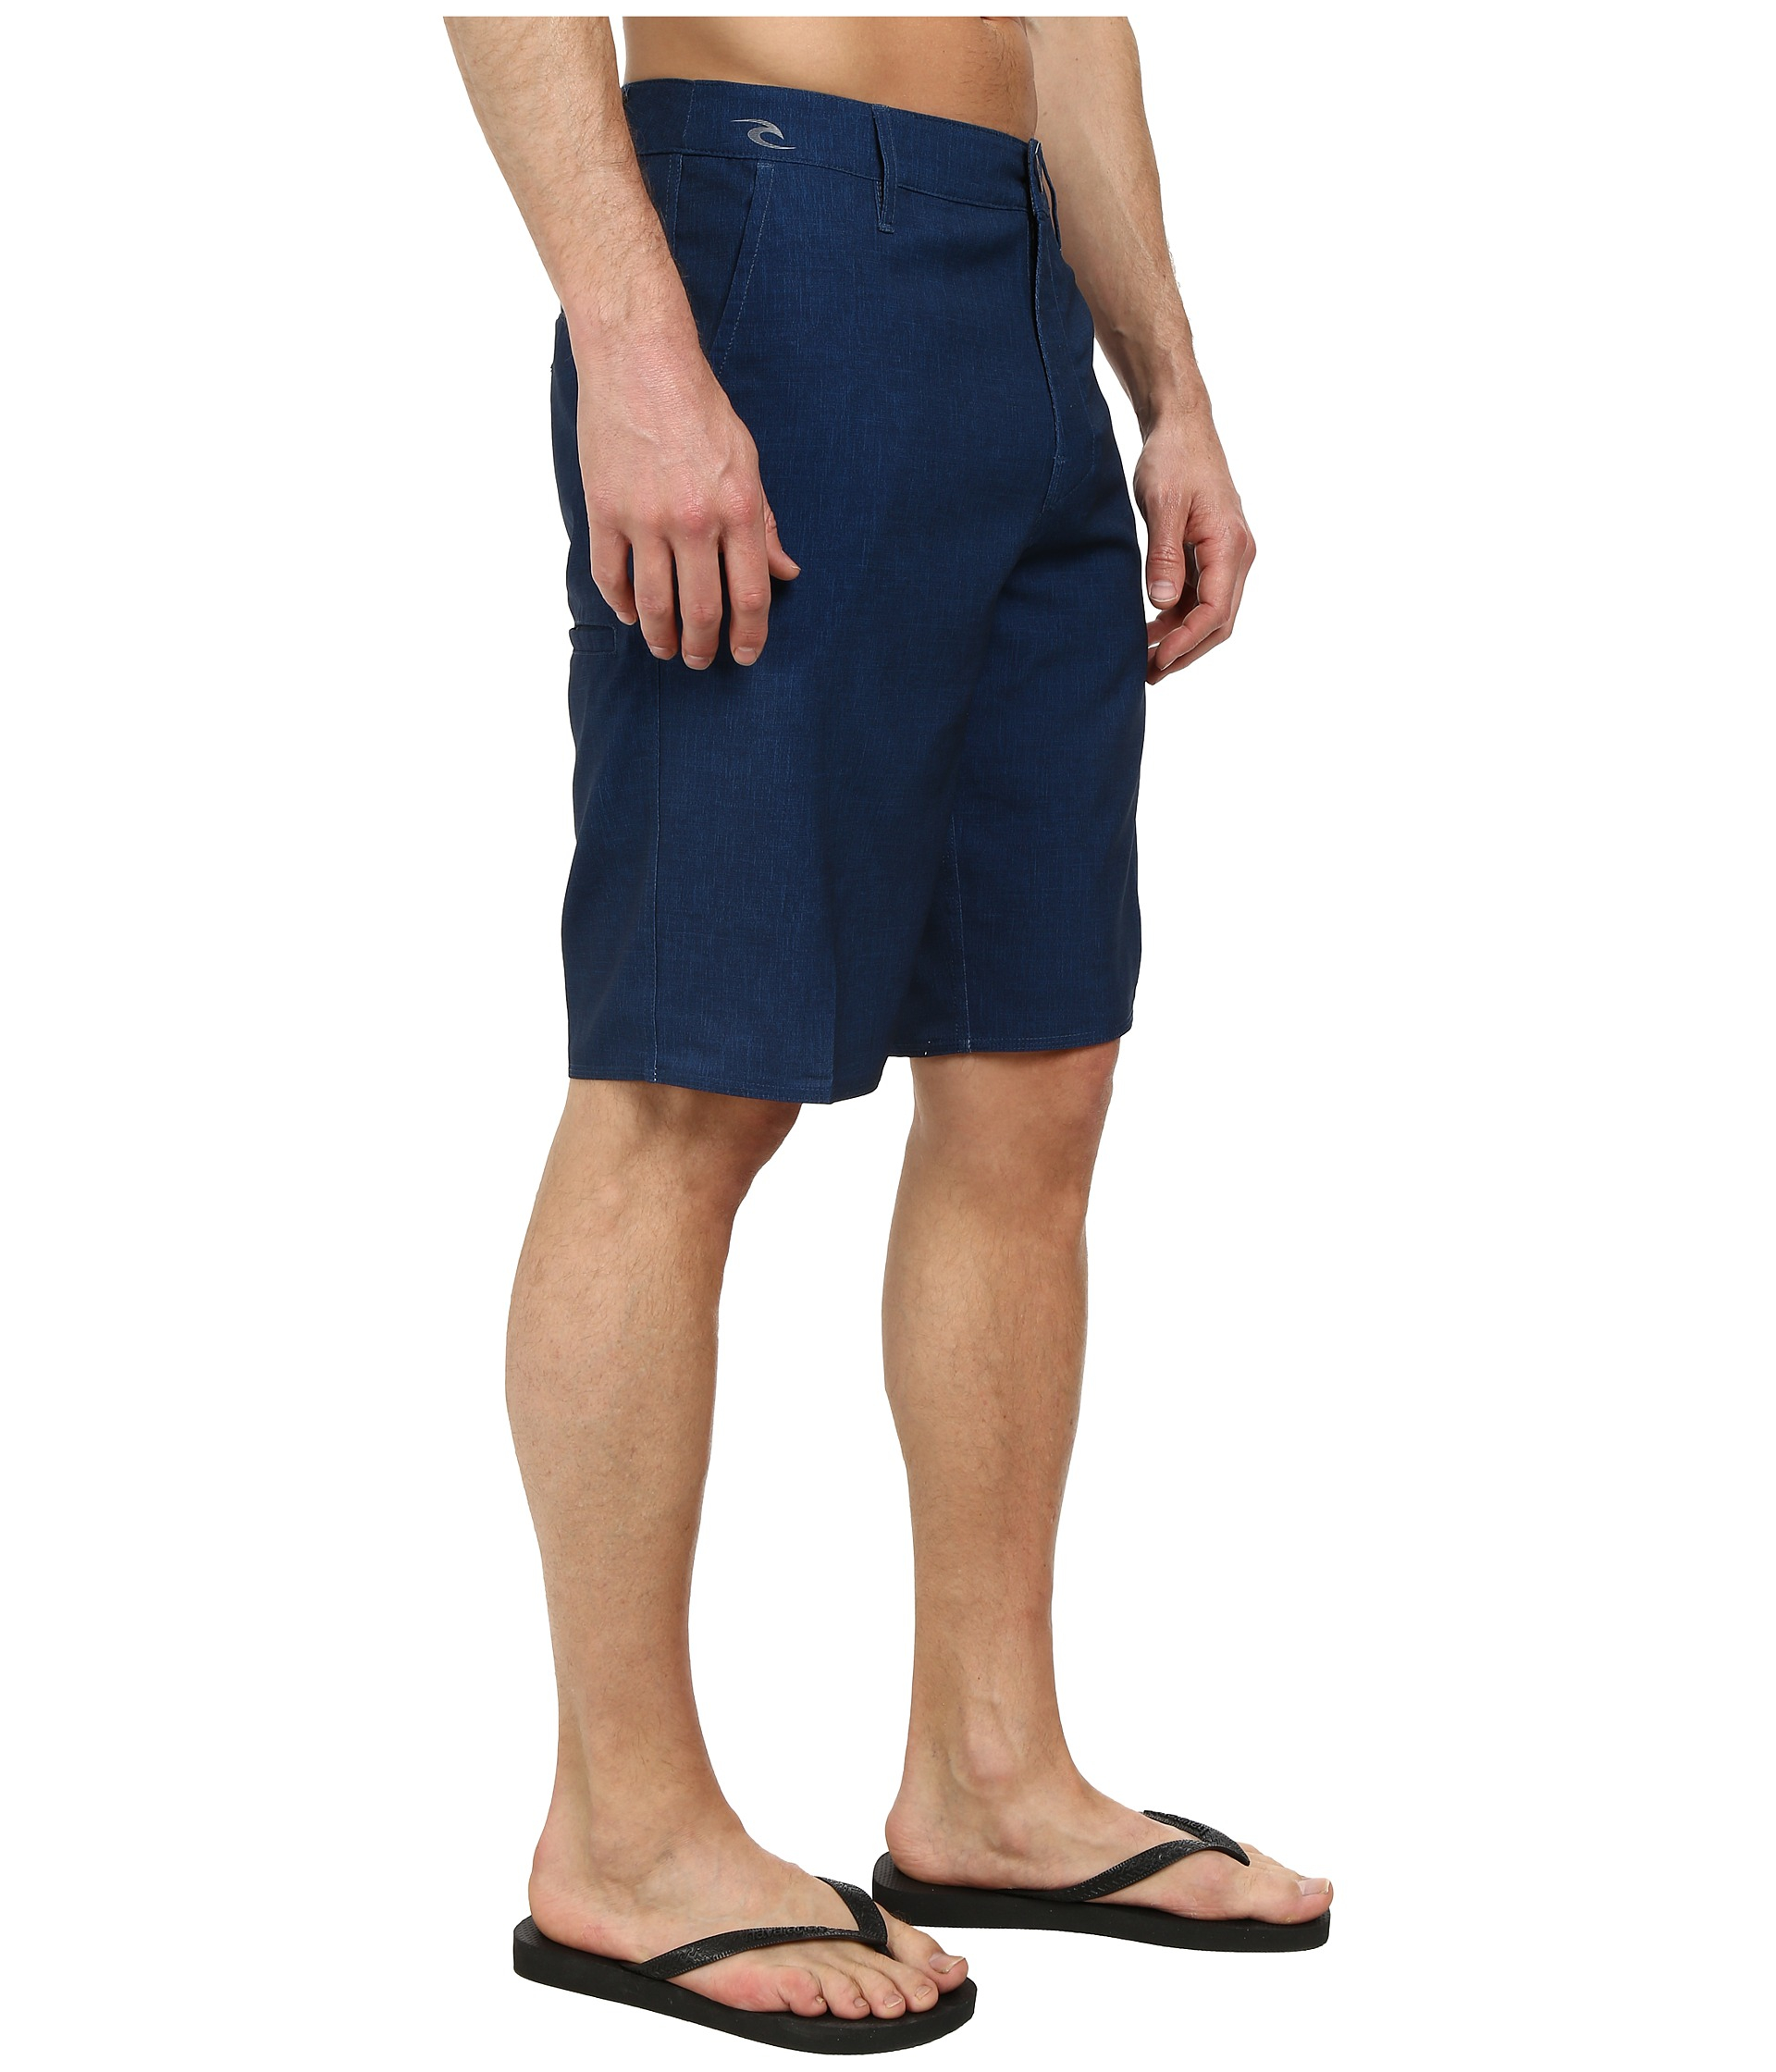 Rip Curl Mirage Phaser Boardwalk Shorts in Navy (Blue) for Men - Lyst